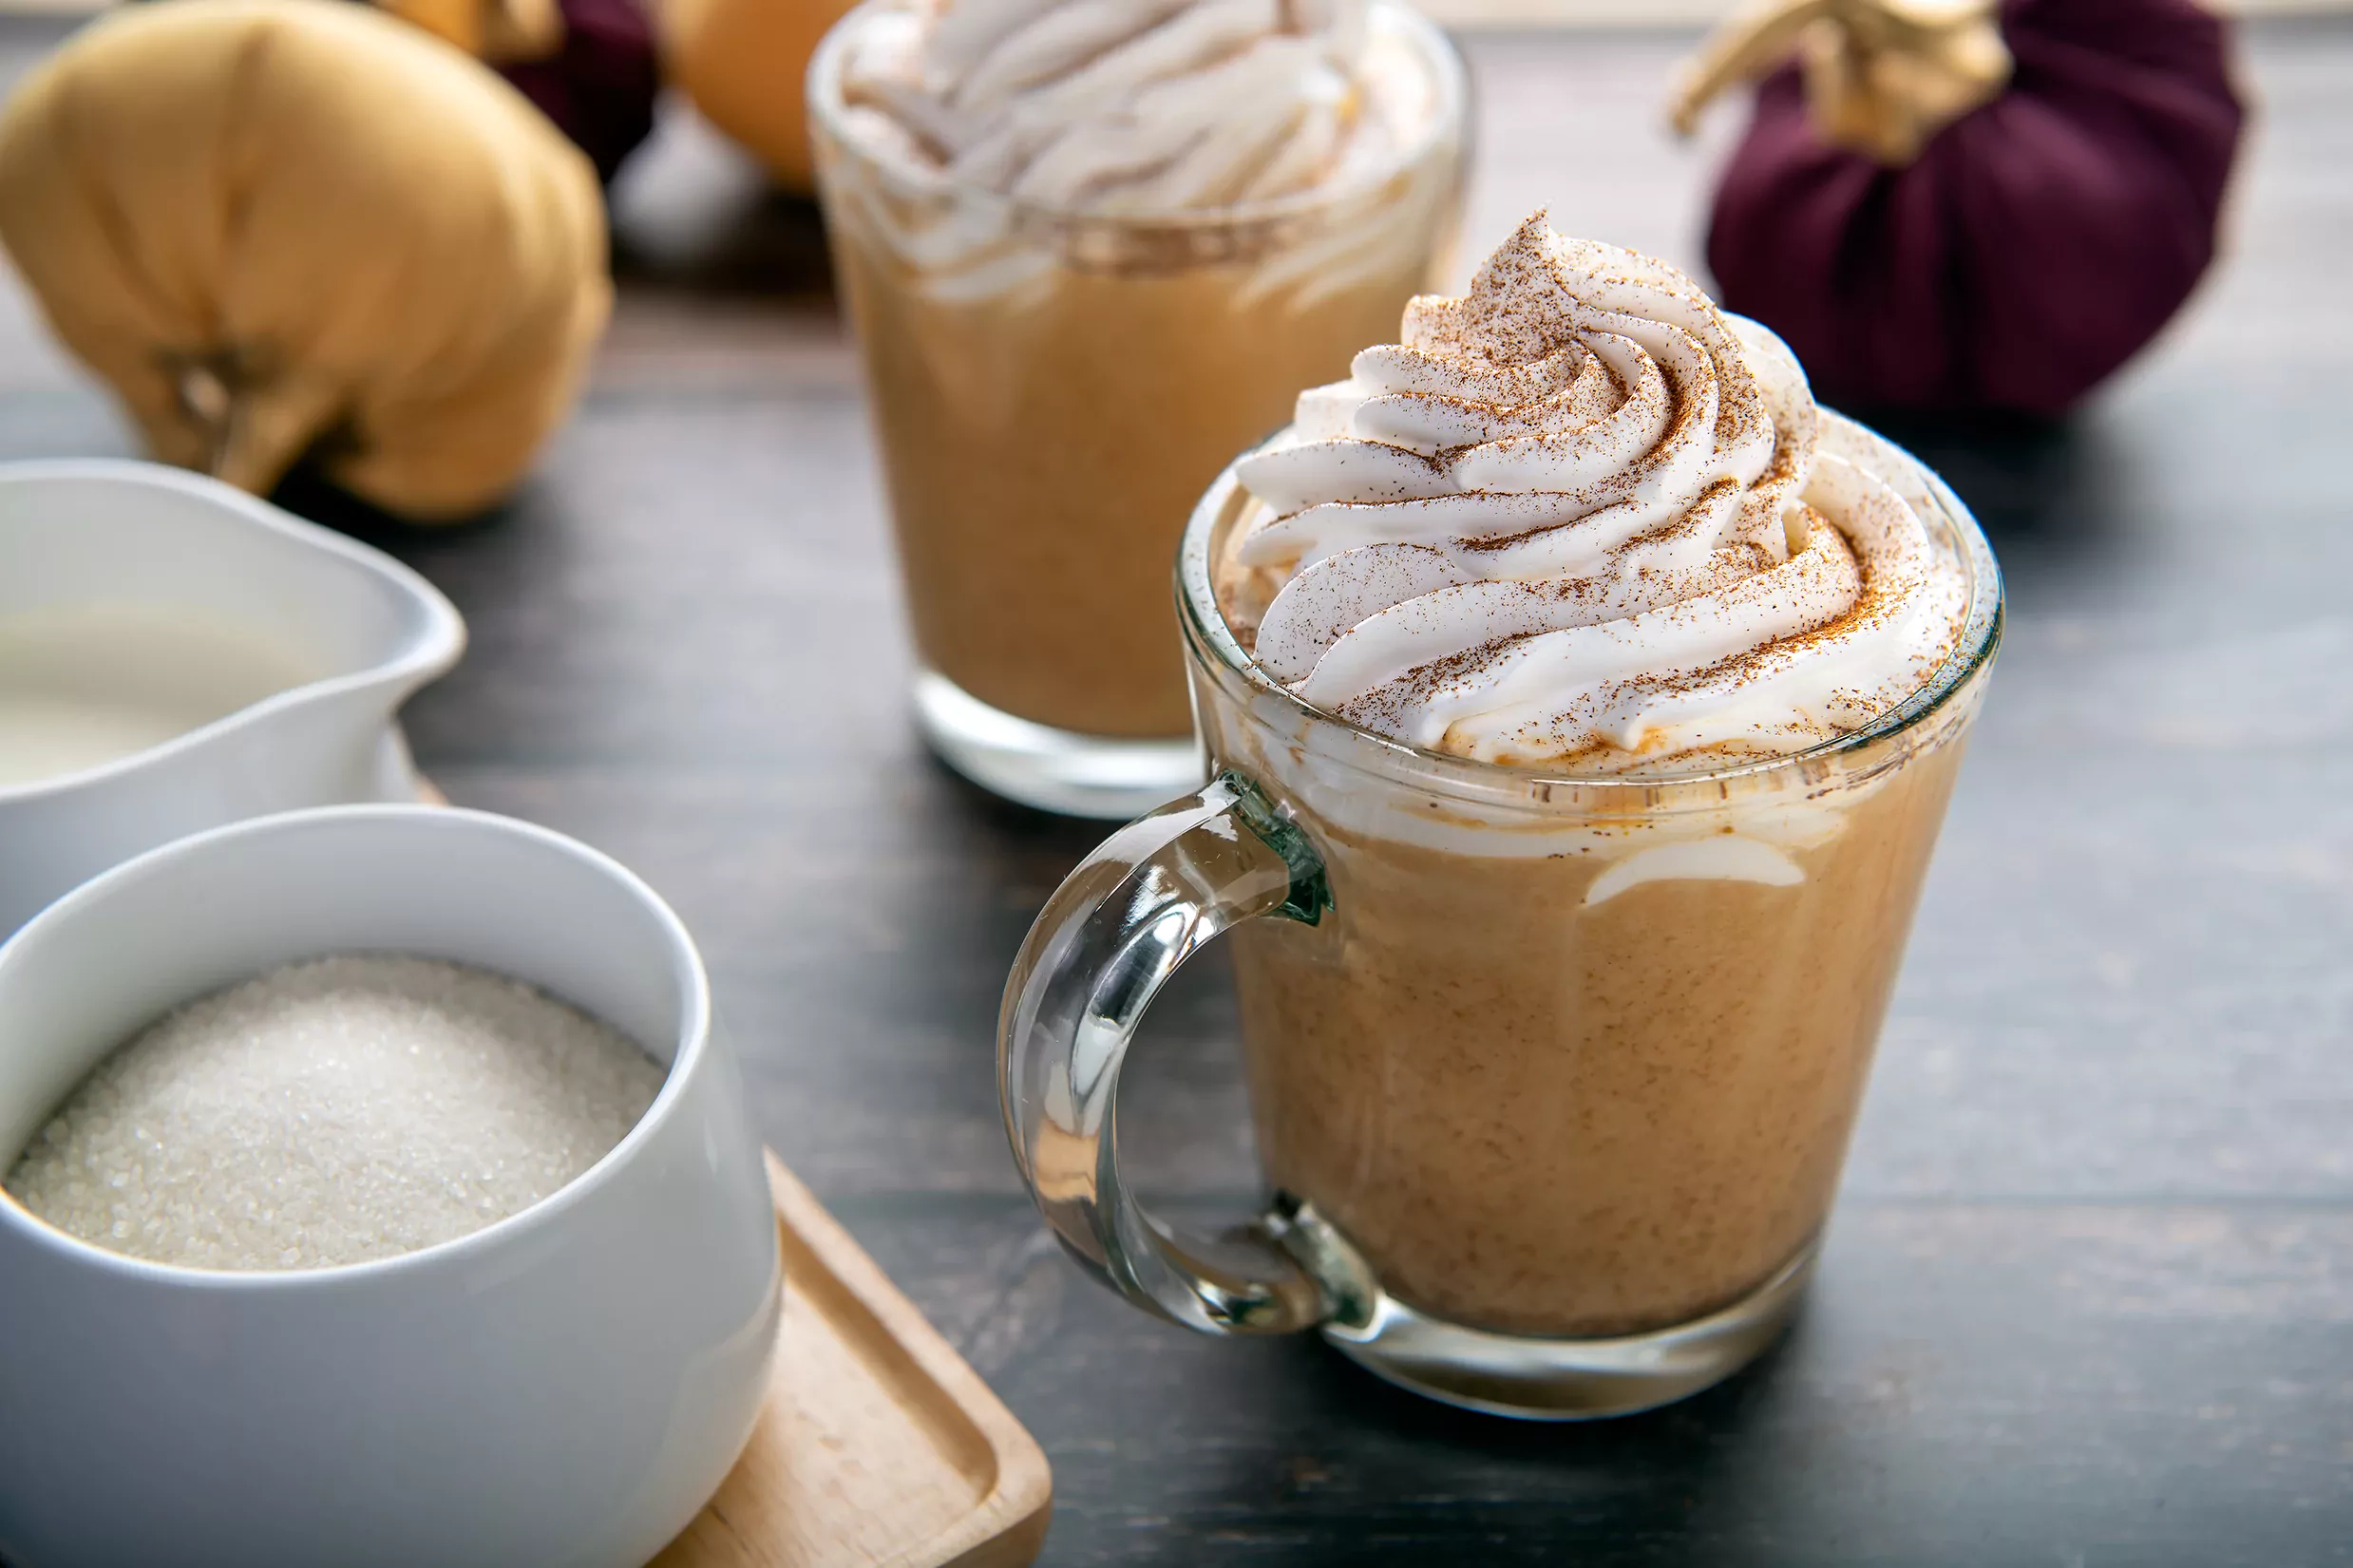 Pumpkin spice latte - Kürbisgewürz-Kaffee